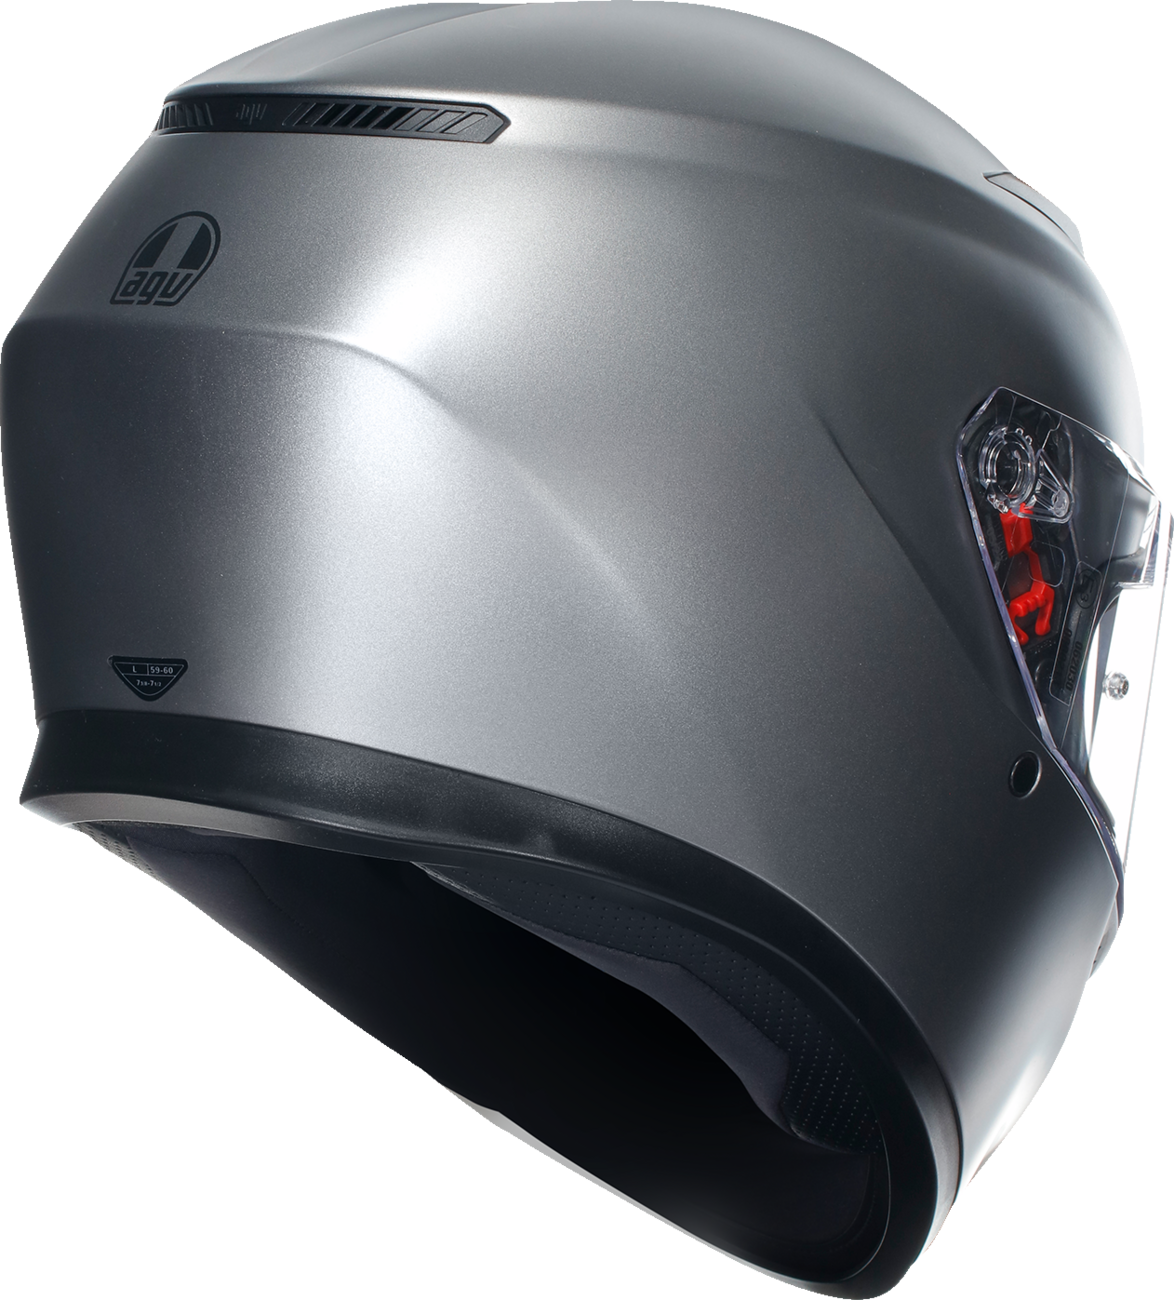 AGV K3 Helmet - Matte Rodio Gray - Medium 2118381004006M